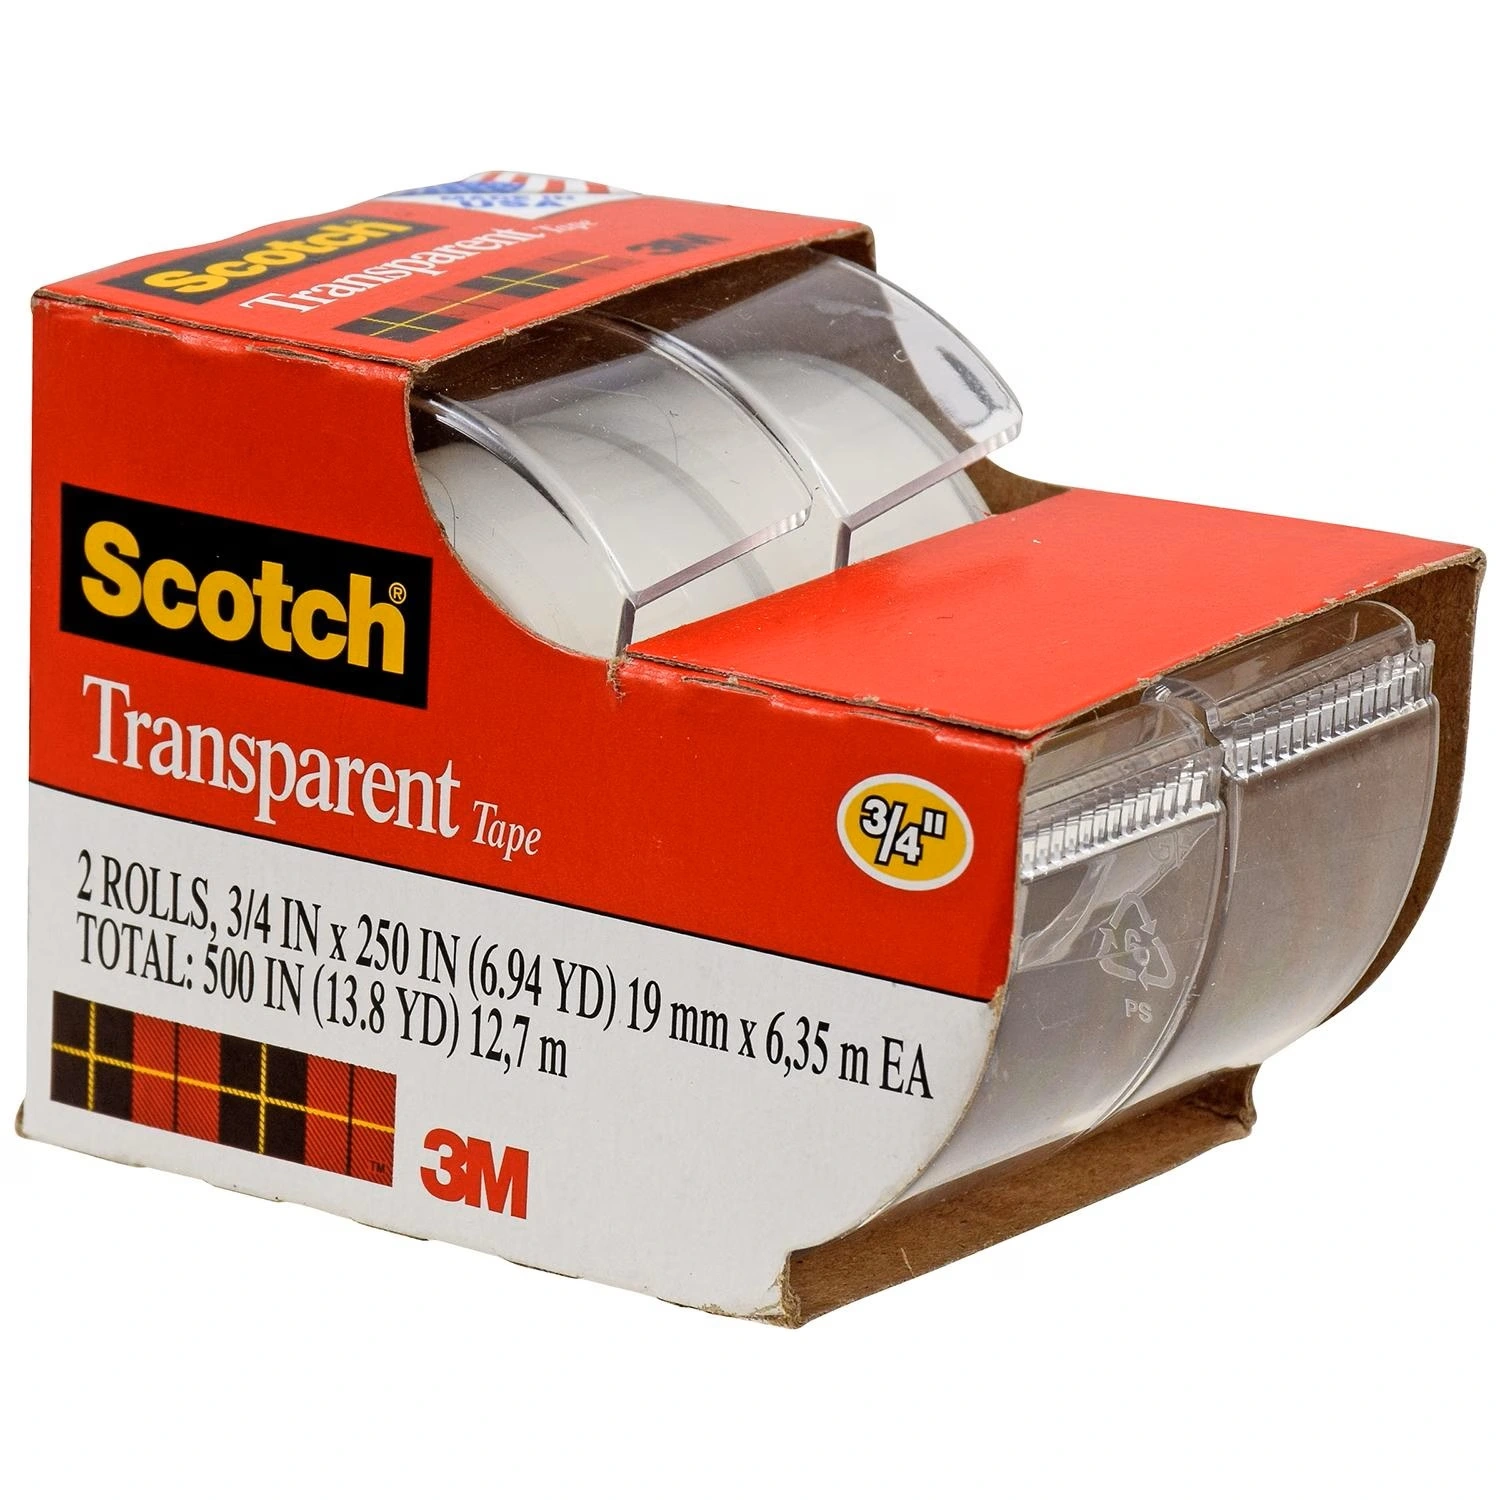 Scotch Transparent Tape 2-pack - The CEO Creative